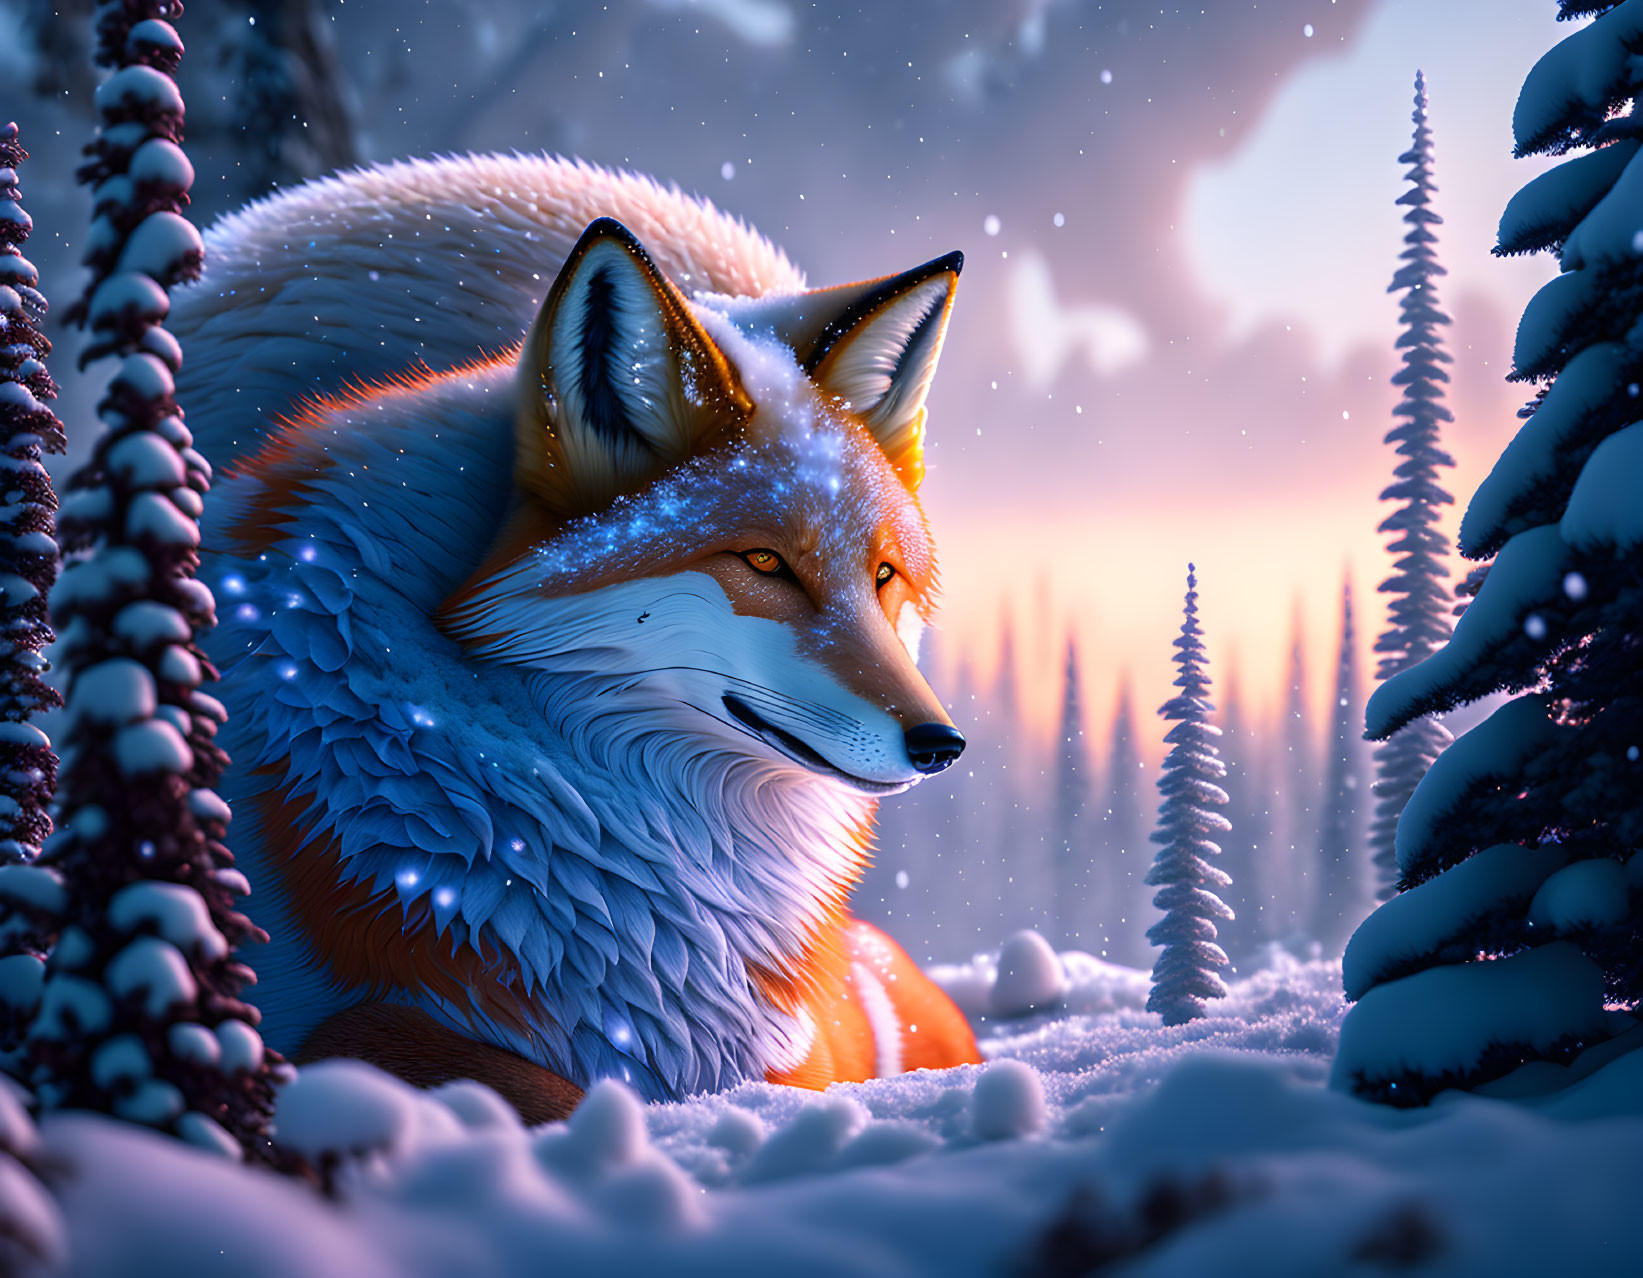 The Great Snow Nine Tail Fox